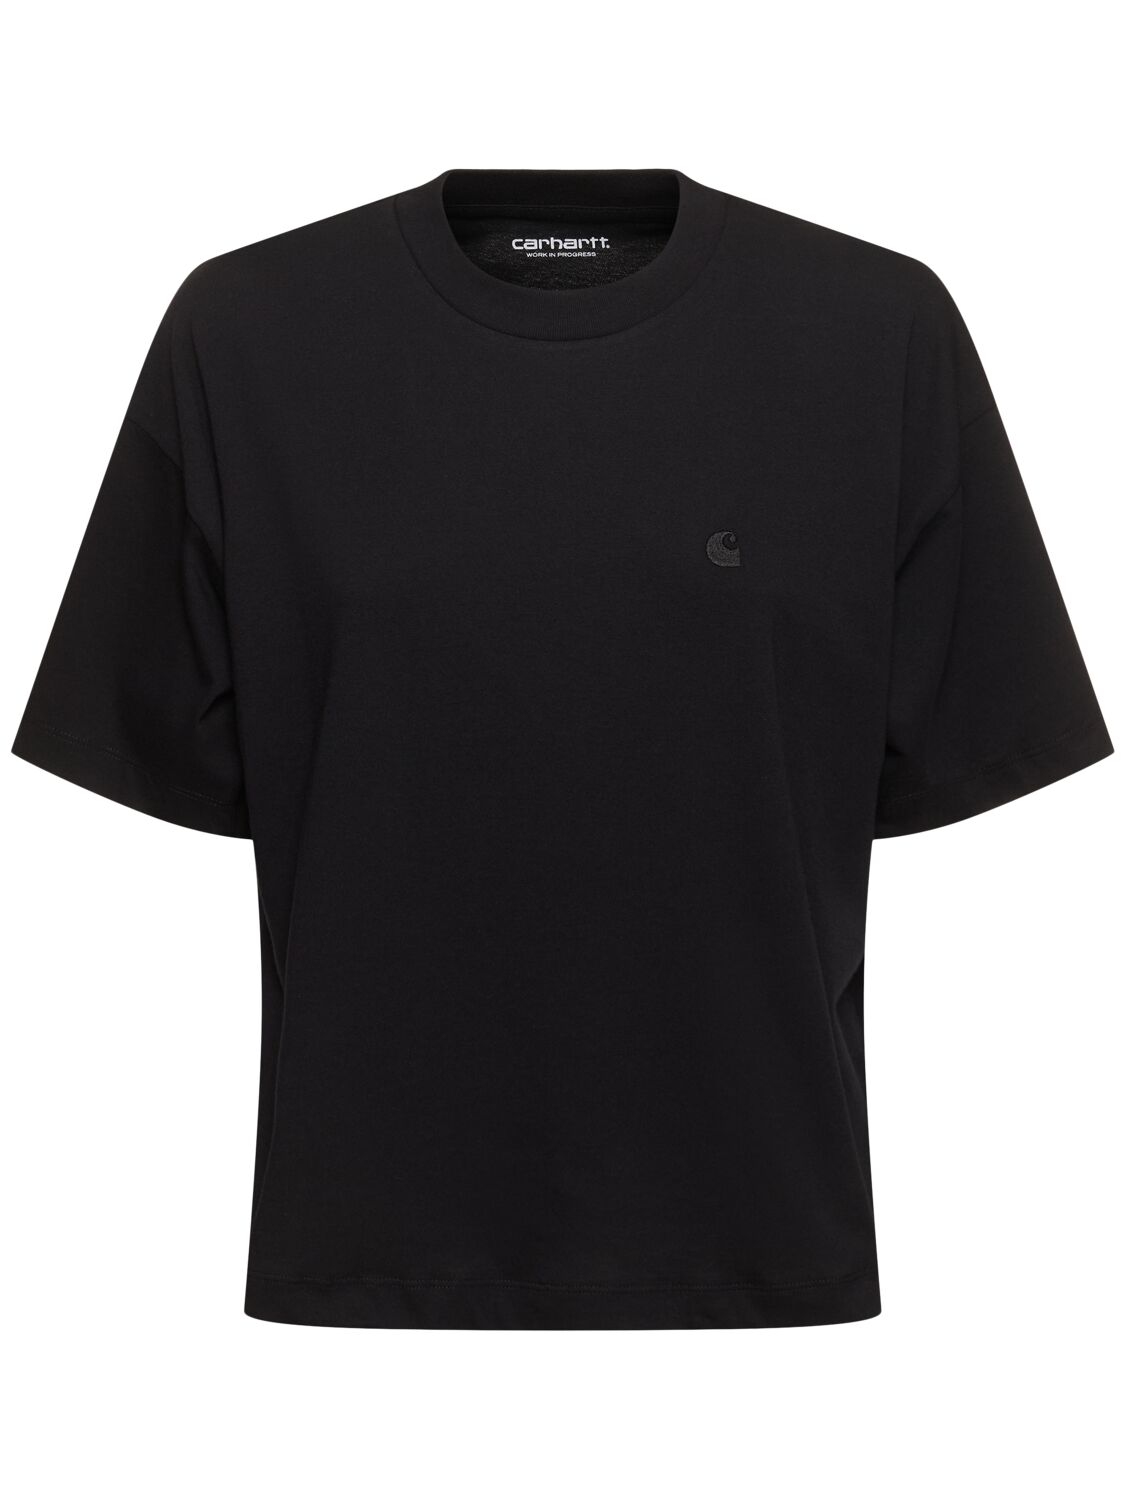 Carhartt Chester Organic Cotton T-shirt In Black